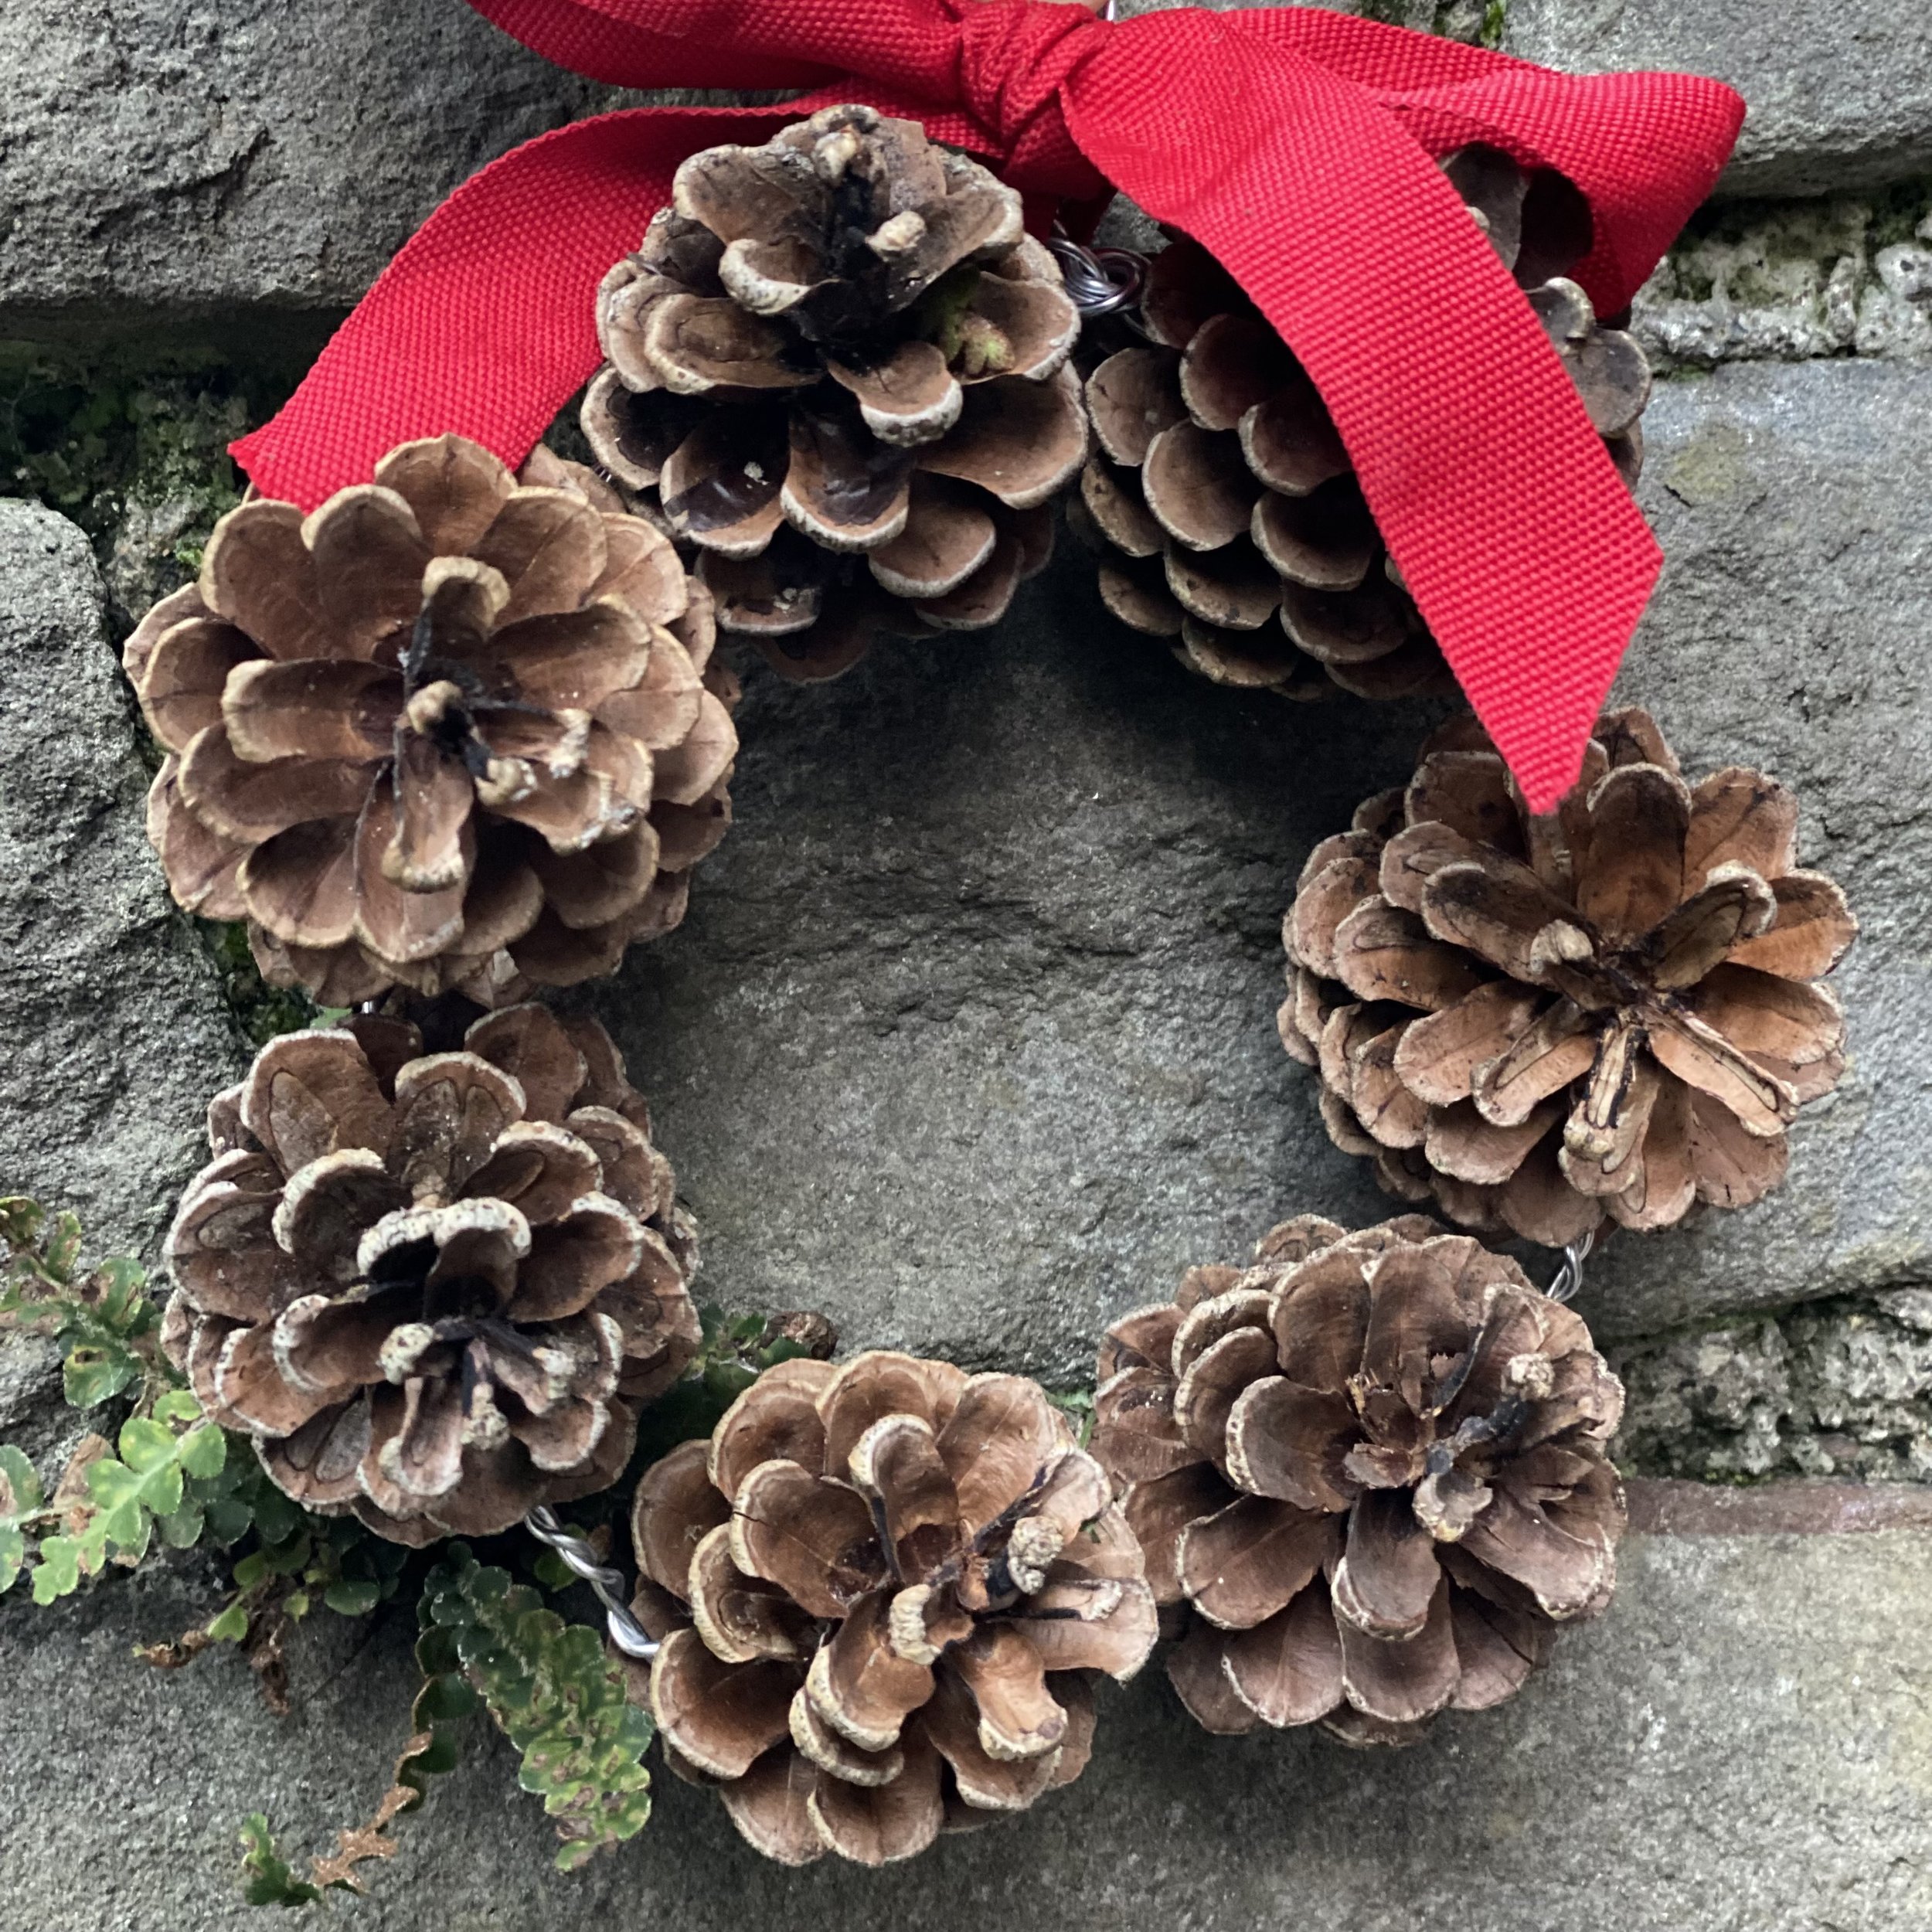 Make a pinecone wreath - Mud & Bloom